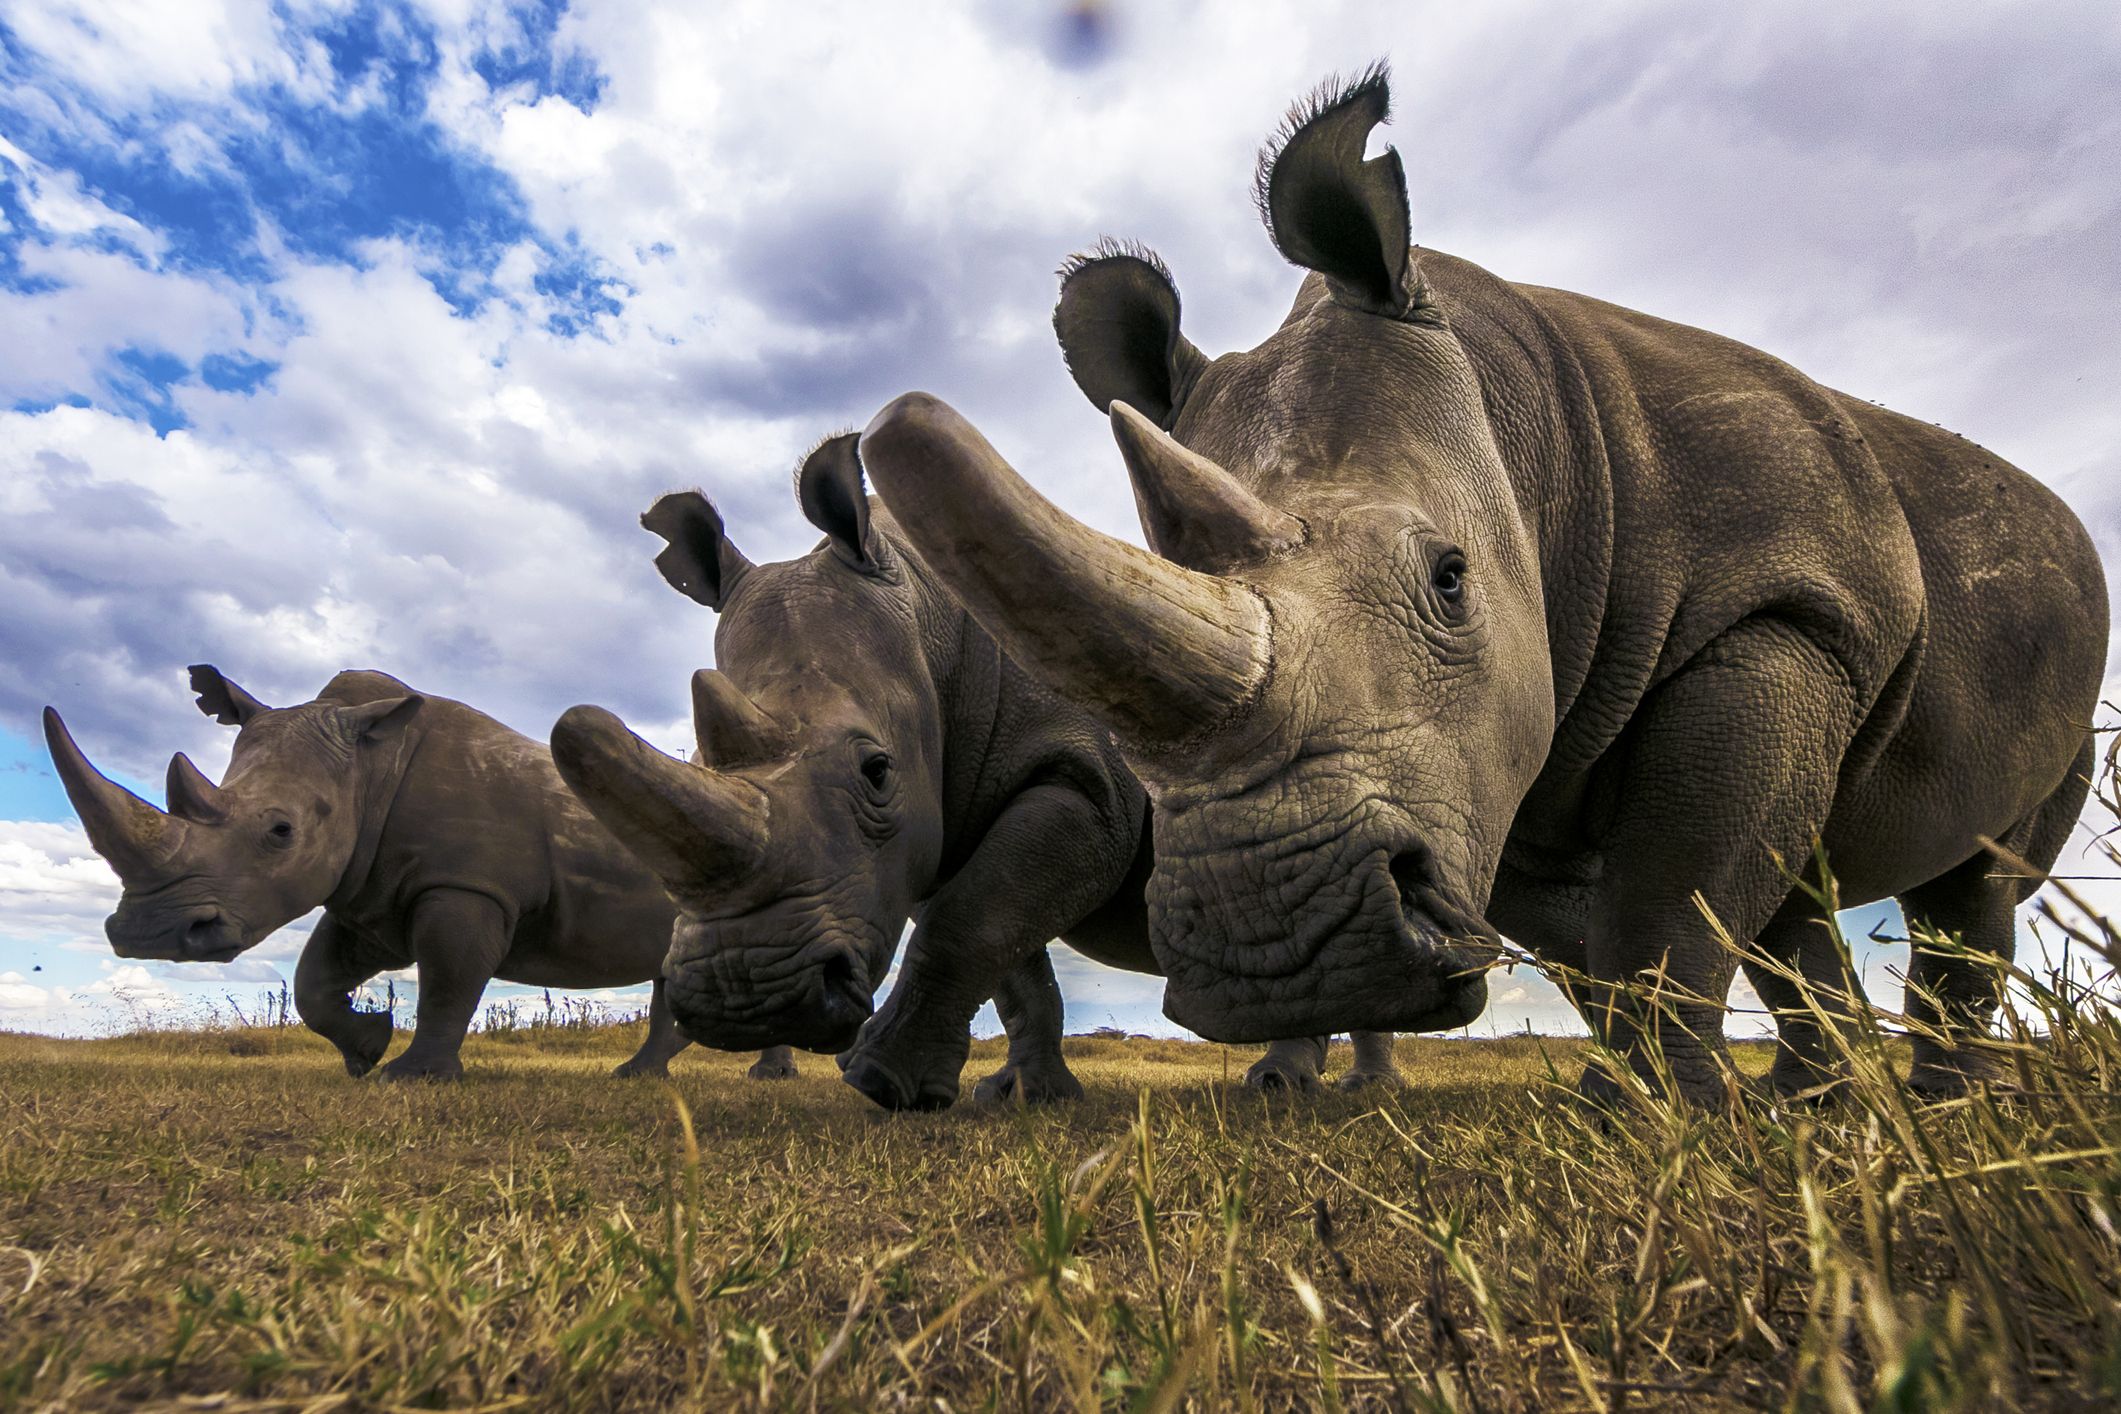 rhinoceros facts